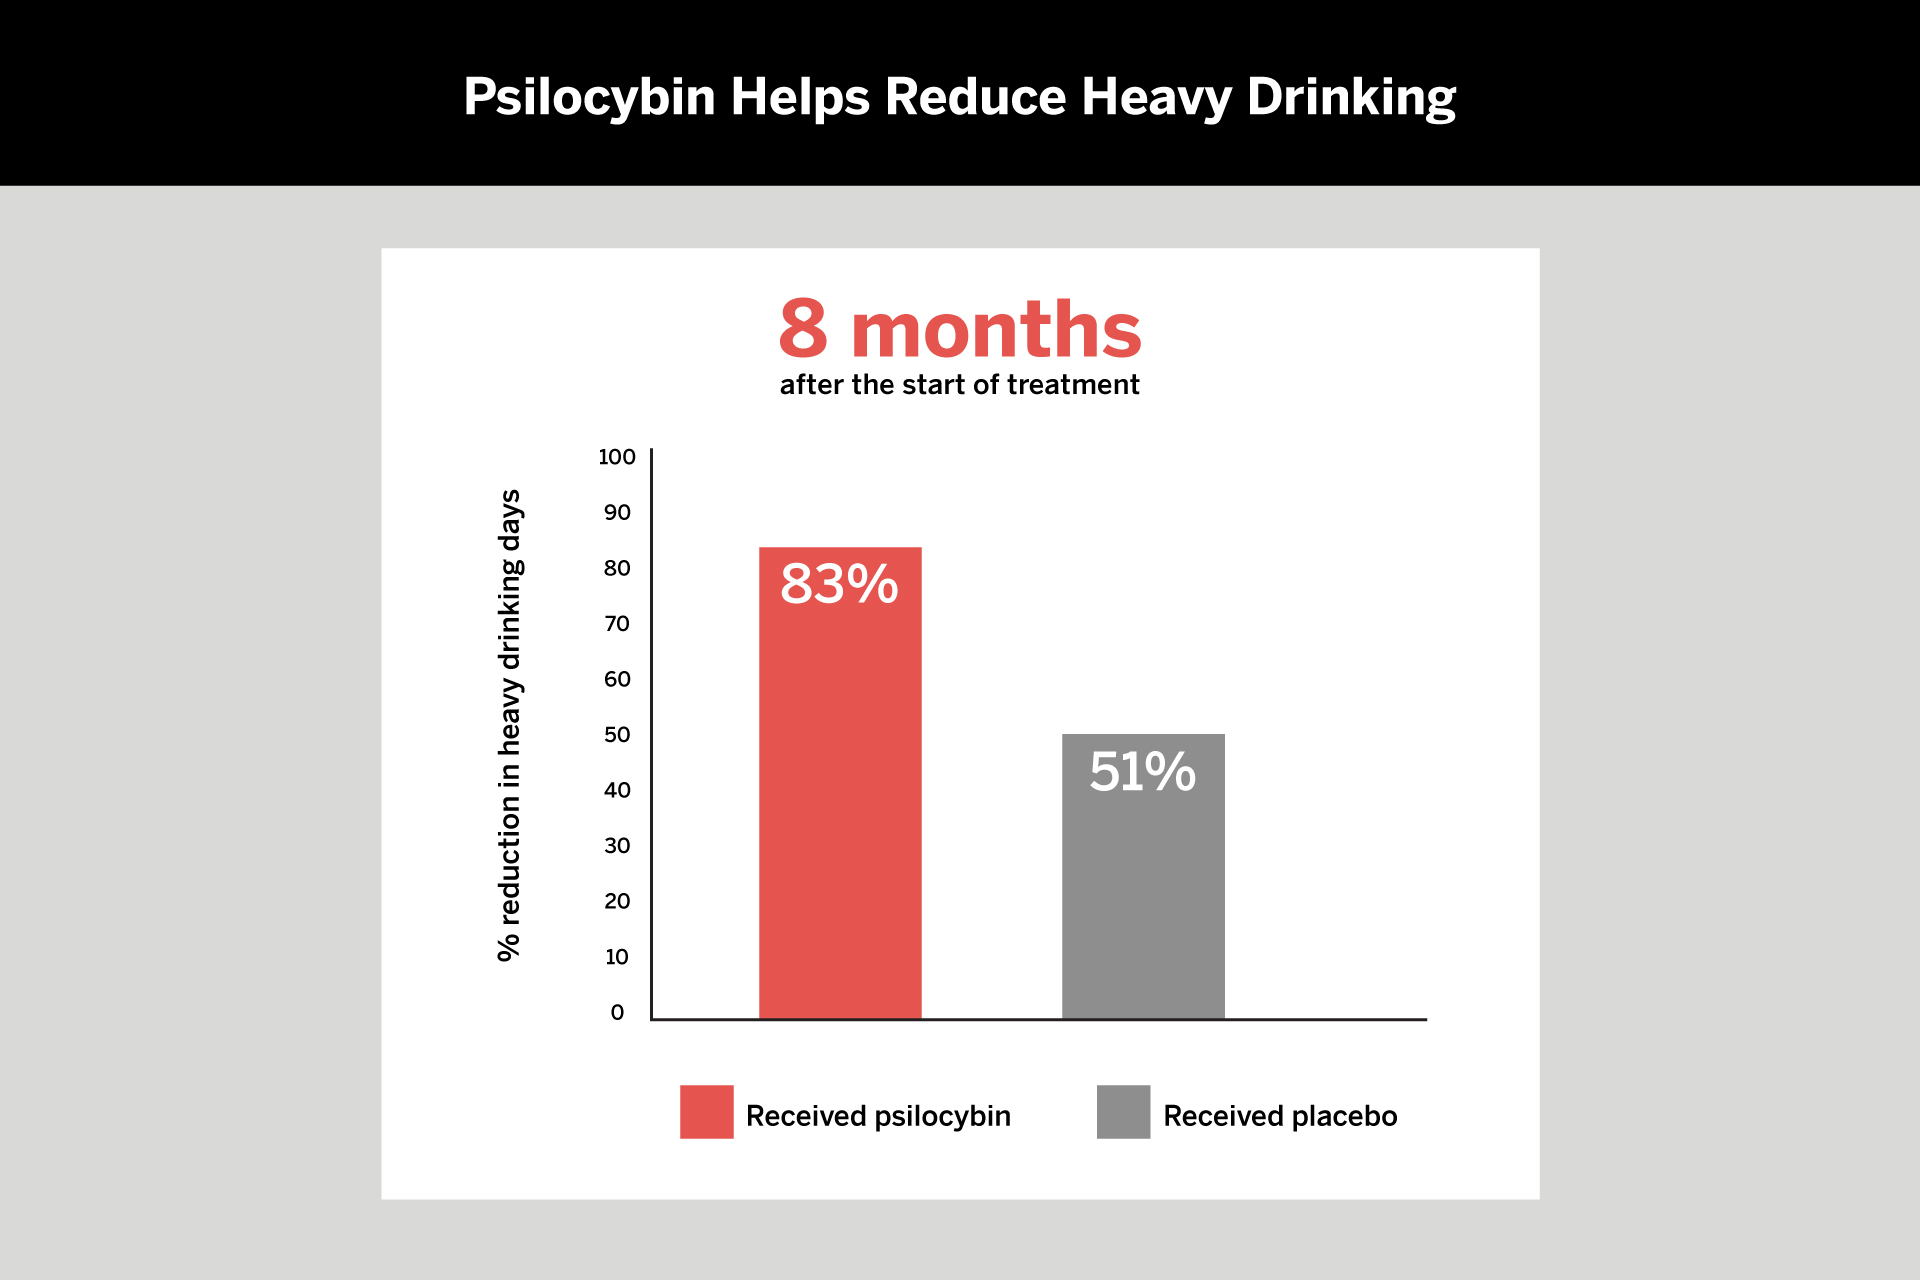 Psilocybin helps reduce heavy drinking